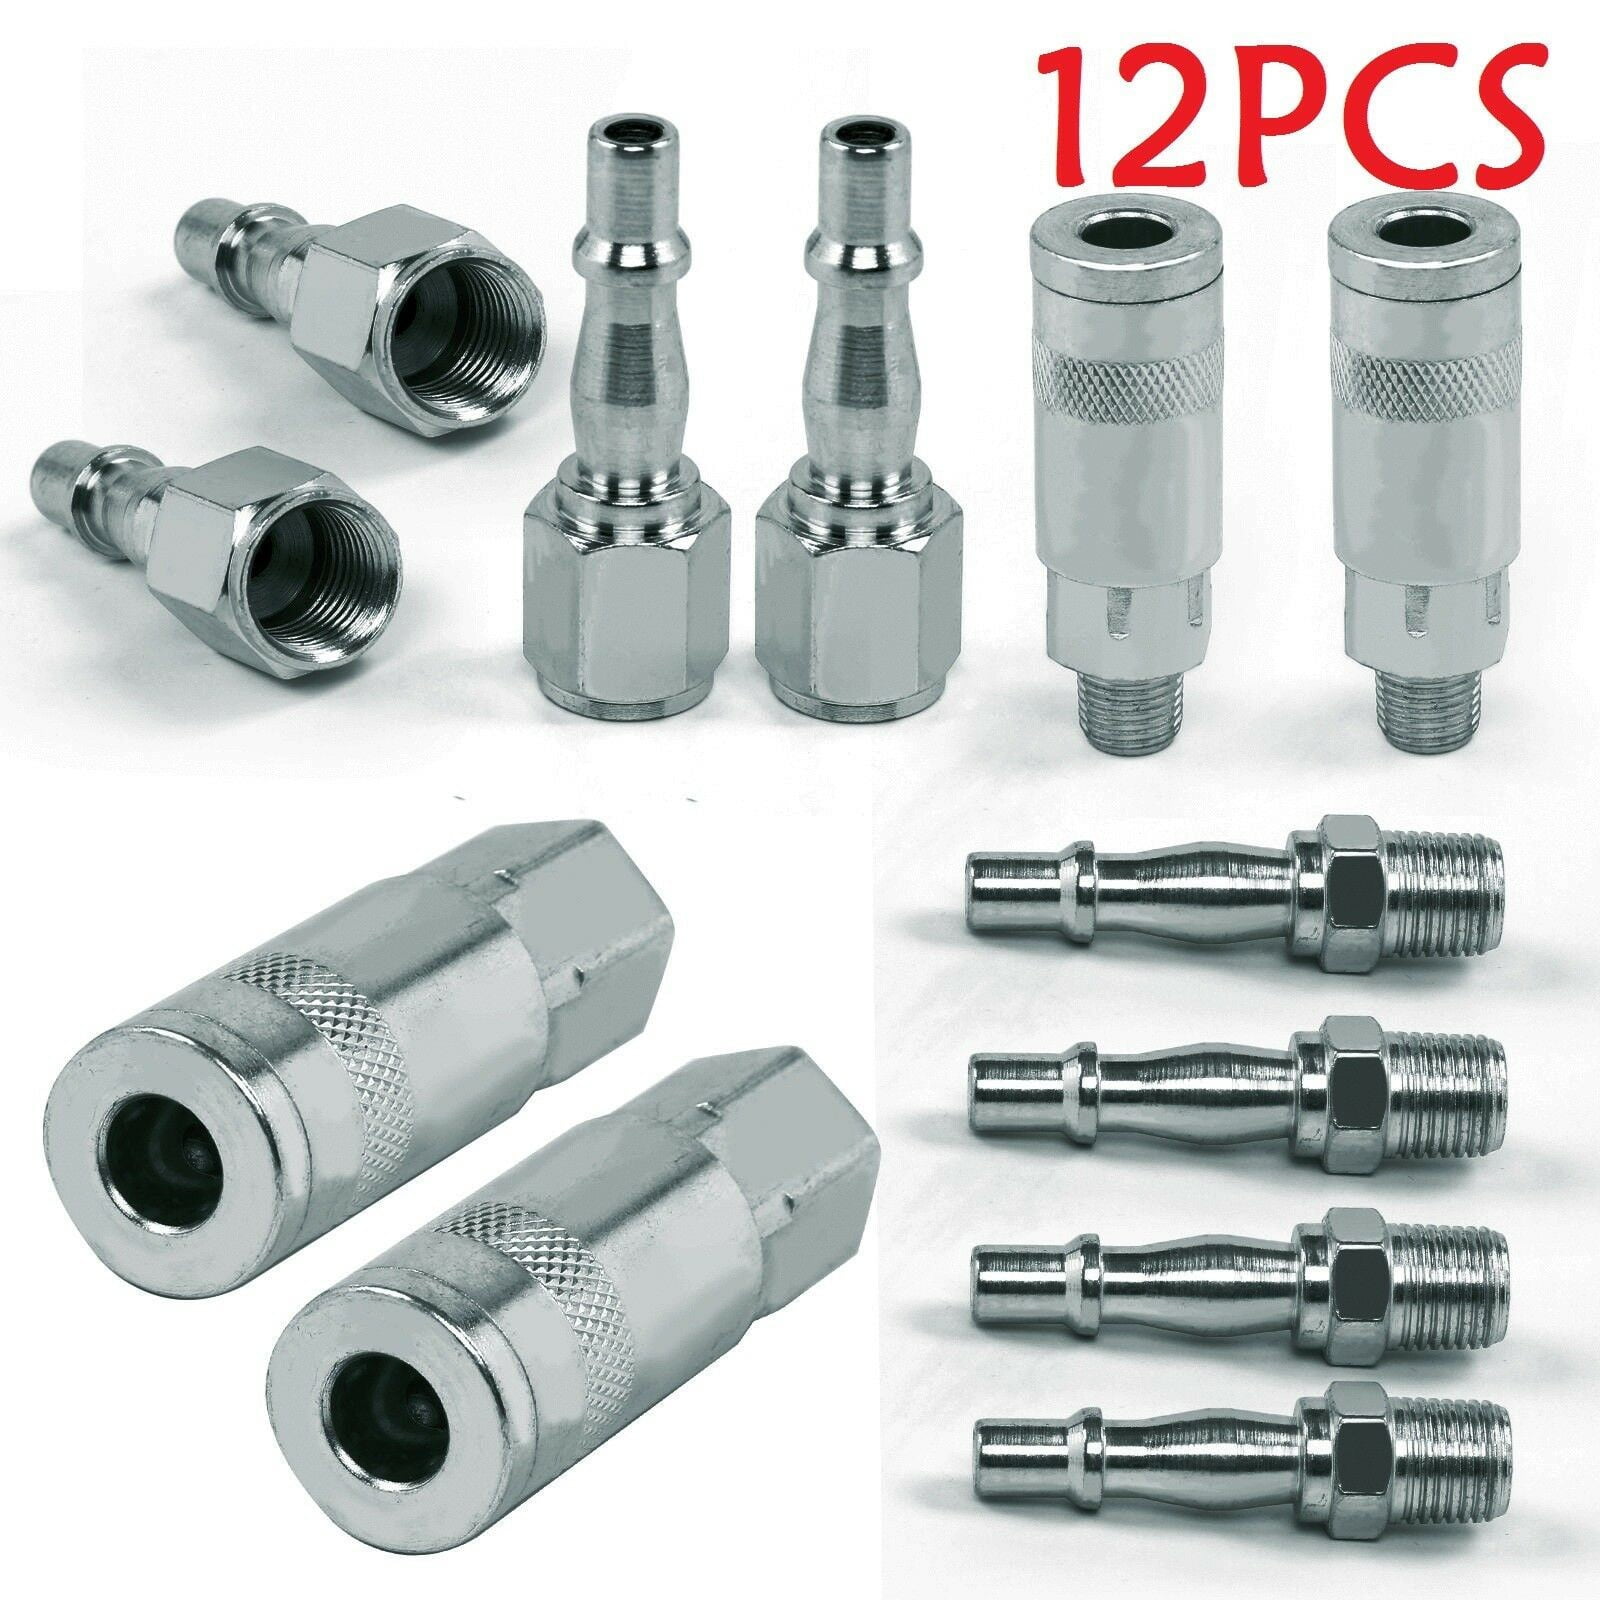 12 PCS Air Line Hose Compressor Fitting Coupling Connector Quick Release 1/4BSP 